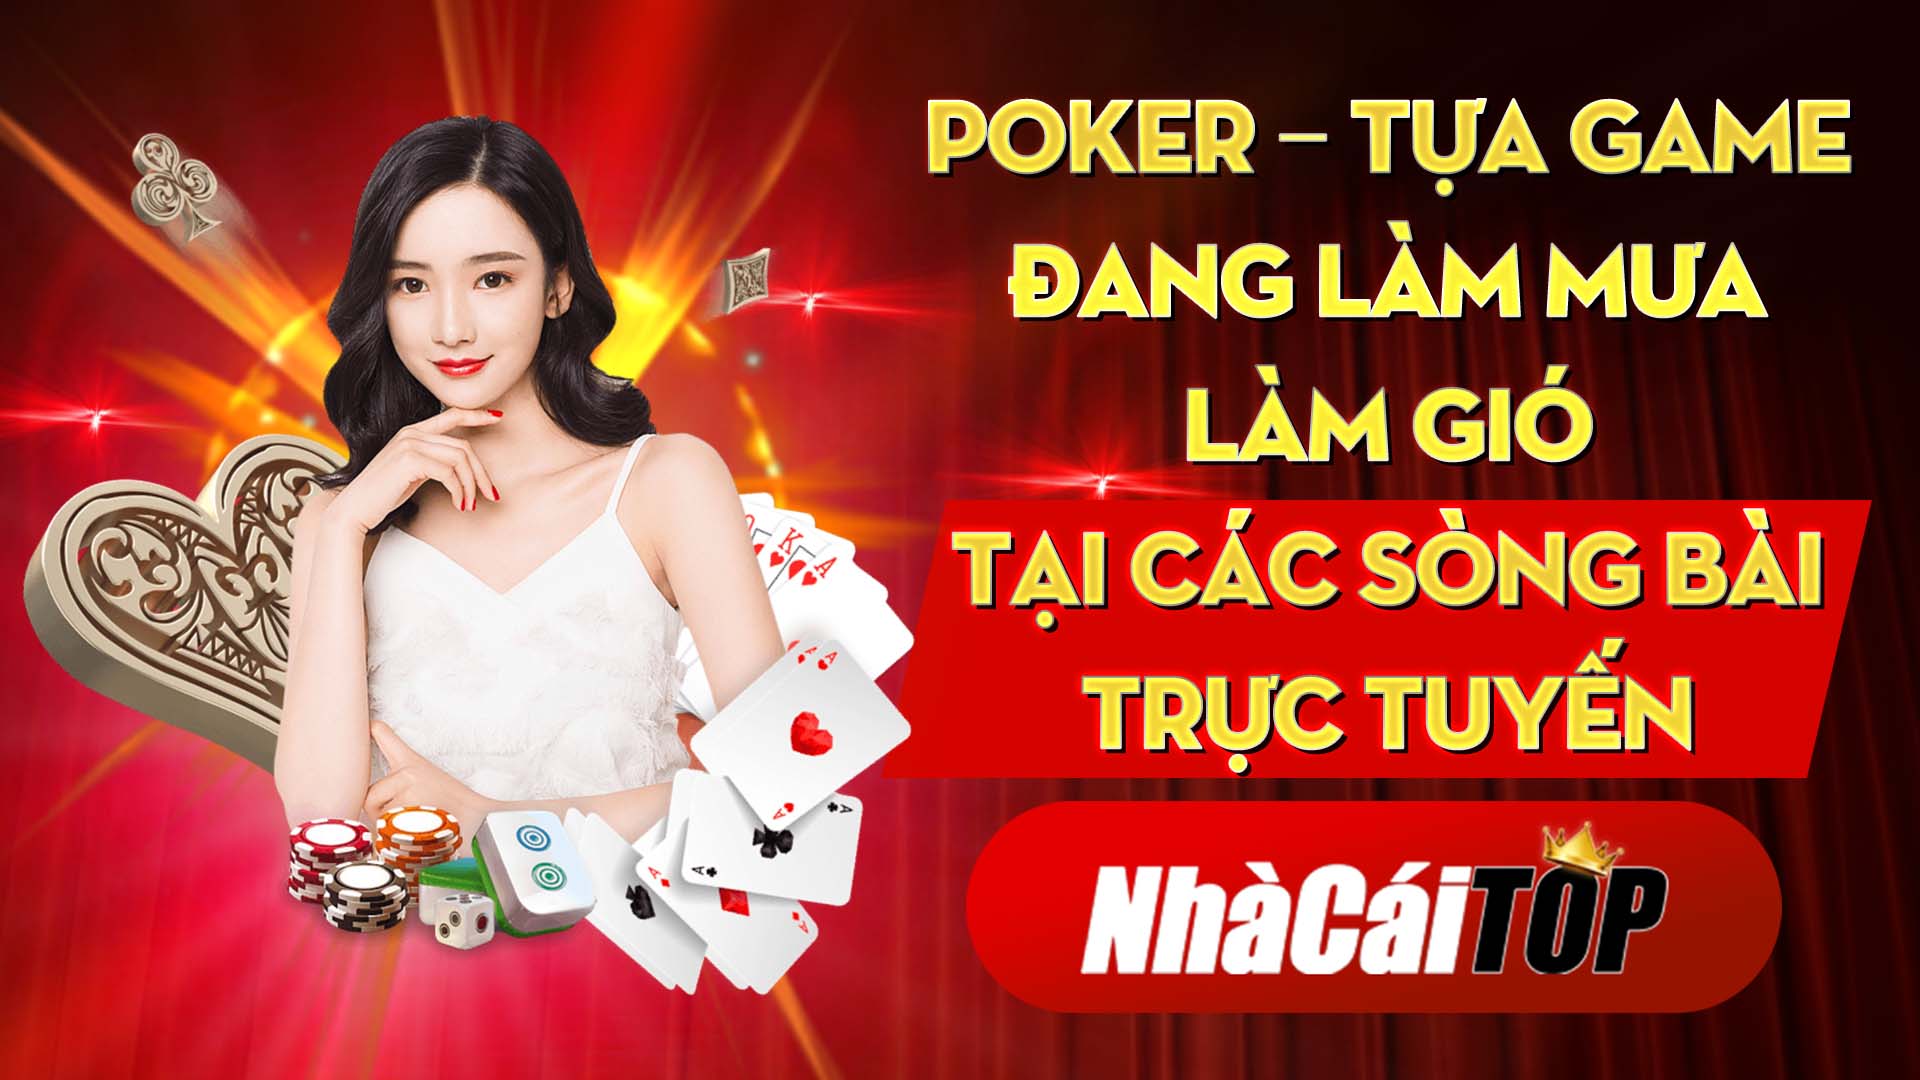 21 Poker – Tua Game Djang Lam Mua Lam Gio Tai Cac Song Bai Truc Tuyen